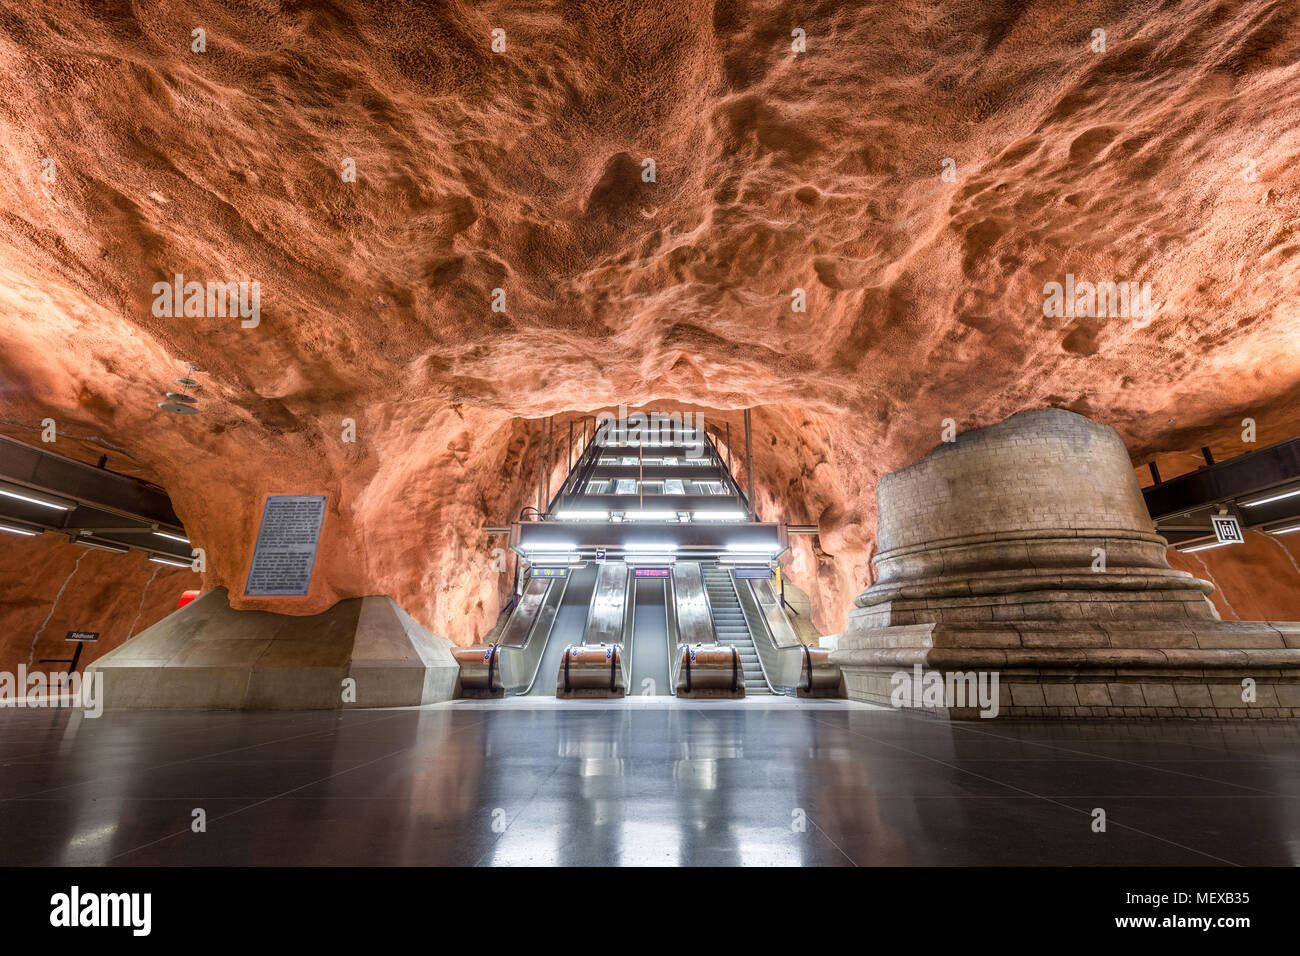 Klassische Ansicht der berühmten radhuset Metro Station Tunnelbana U-Bahn System in Stockholm, Schweden, Skandinavien Stockfoto